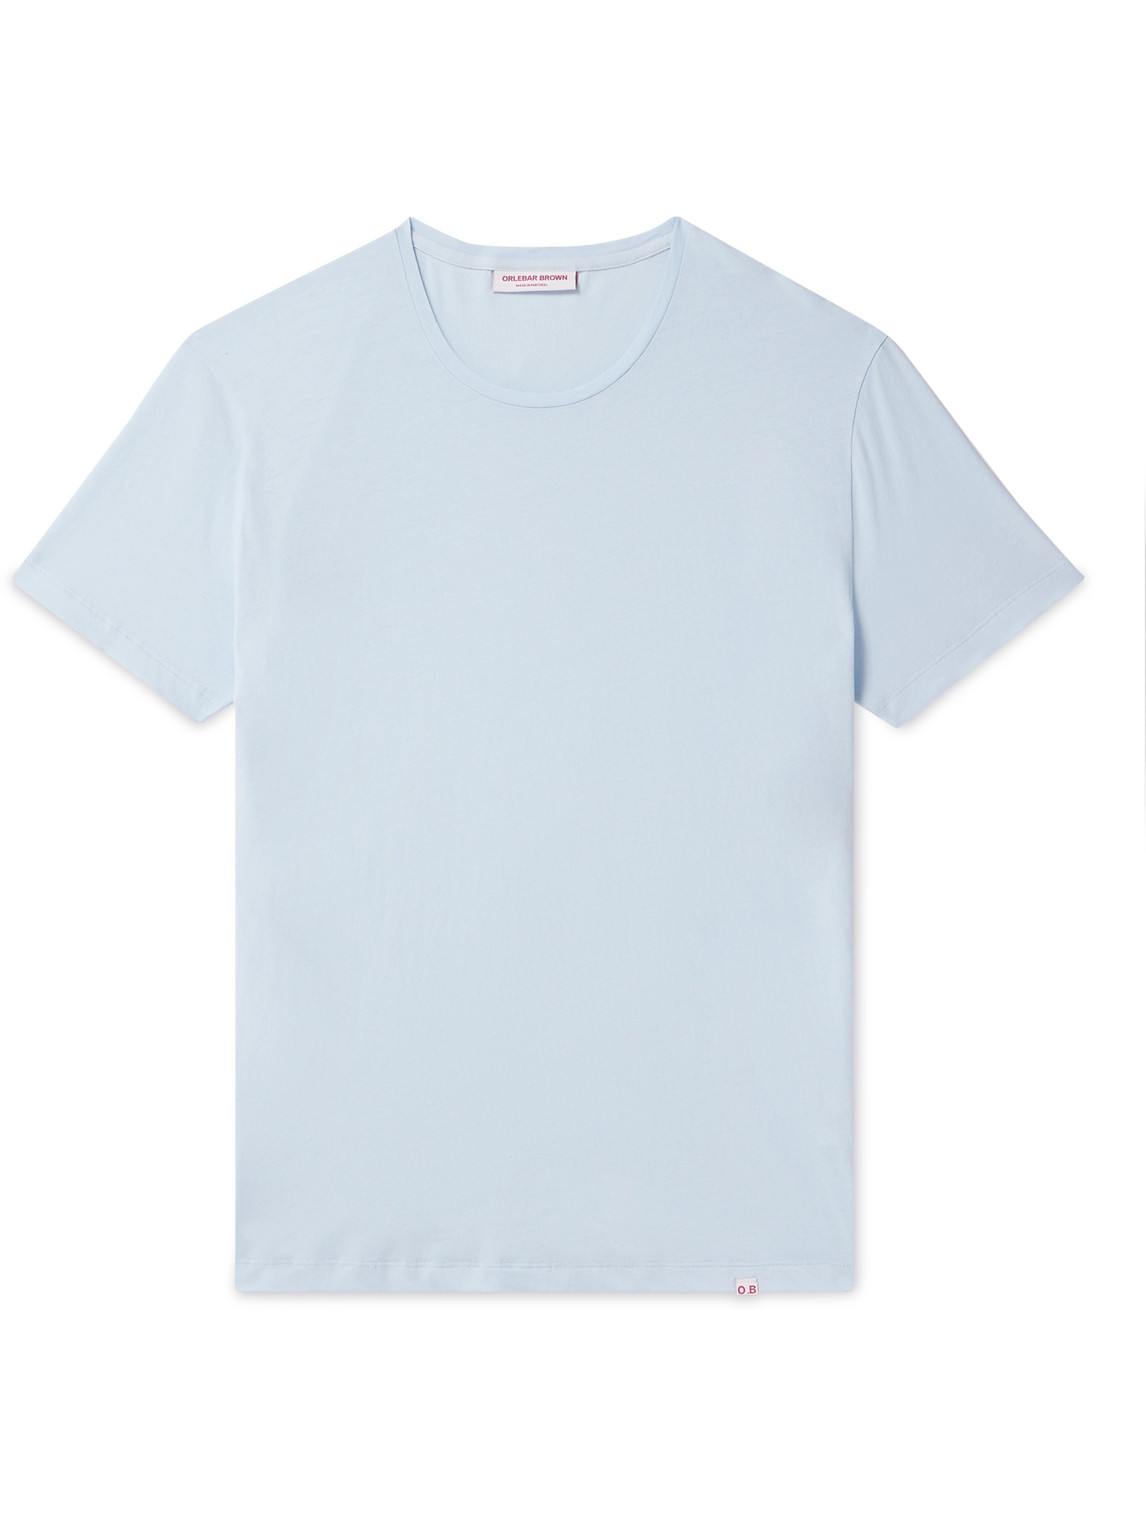 Orlebar Brown - OB-T Slim-Fit Cotton-Jersey T-Shirt - Men - Blue - L von Orlebar Brown